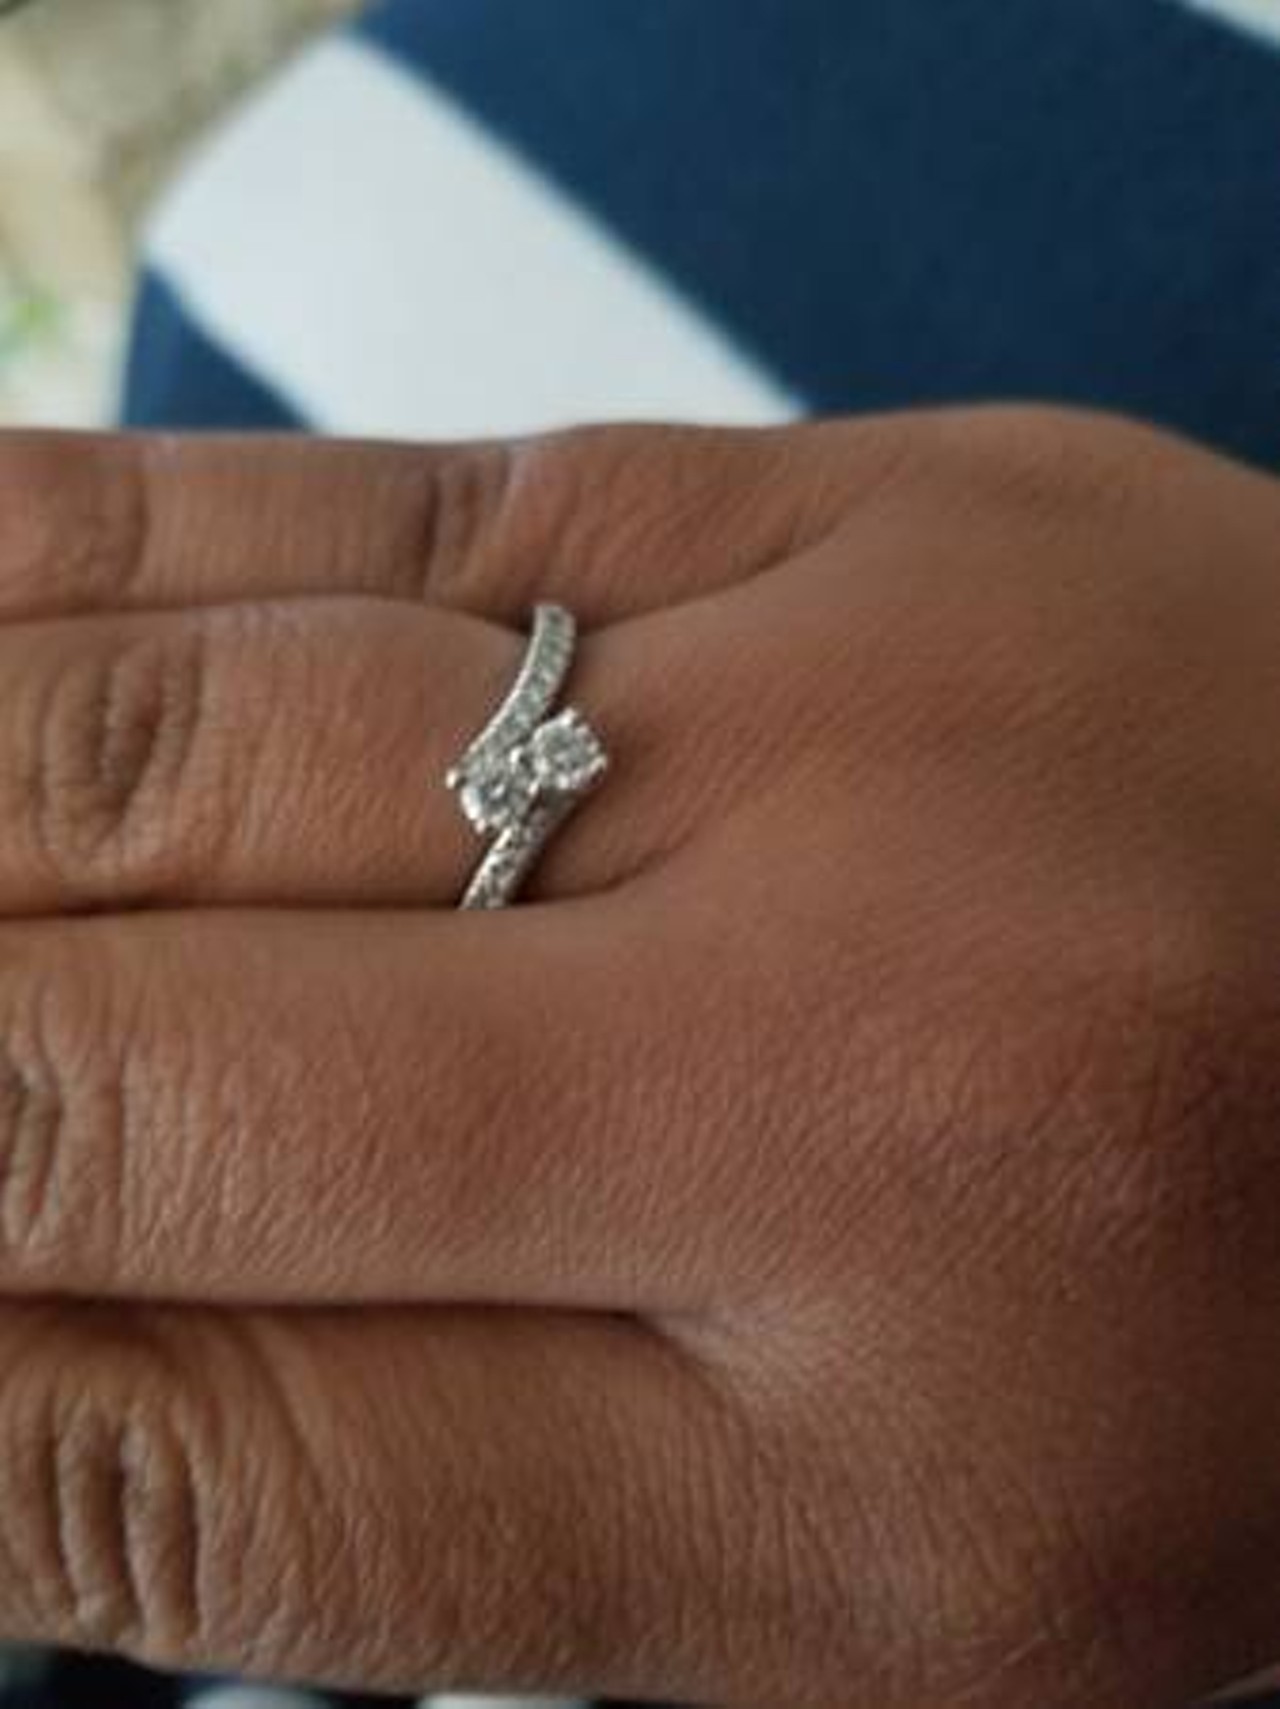 EverUs Used Engagement Ring ($300)
The sentimental value makes it priceless.
Photo via  Alex / Craigslist